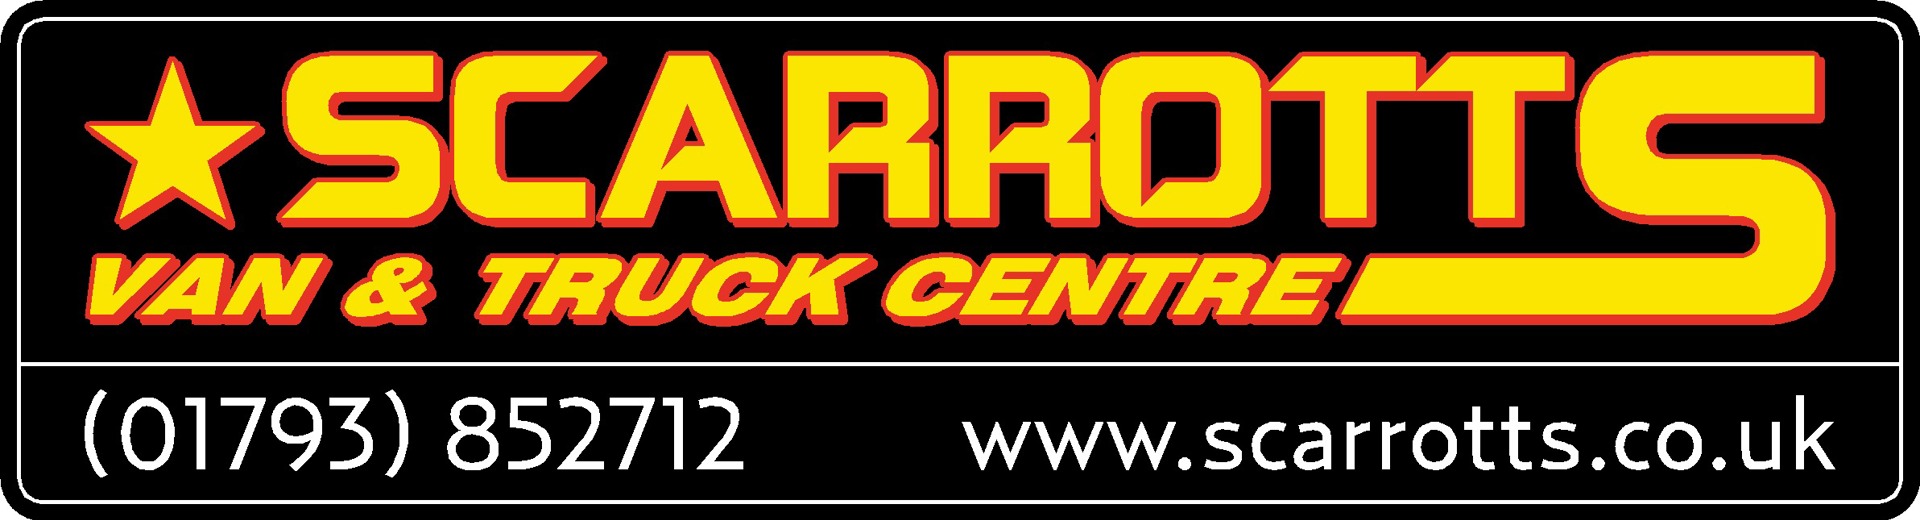 Scarrotts van and truck centre logo